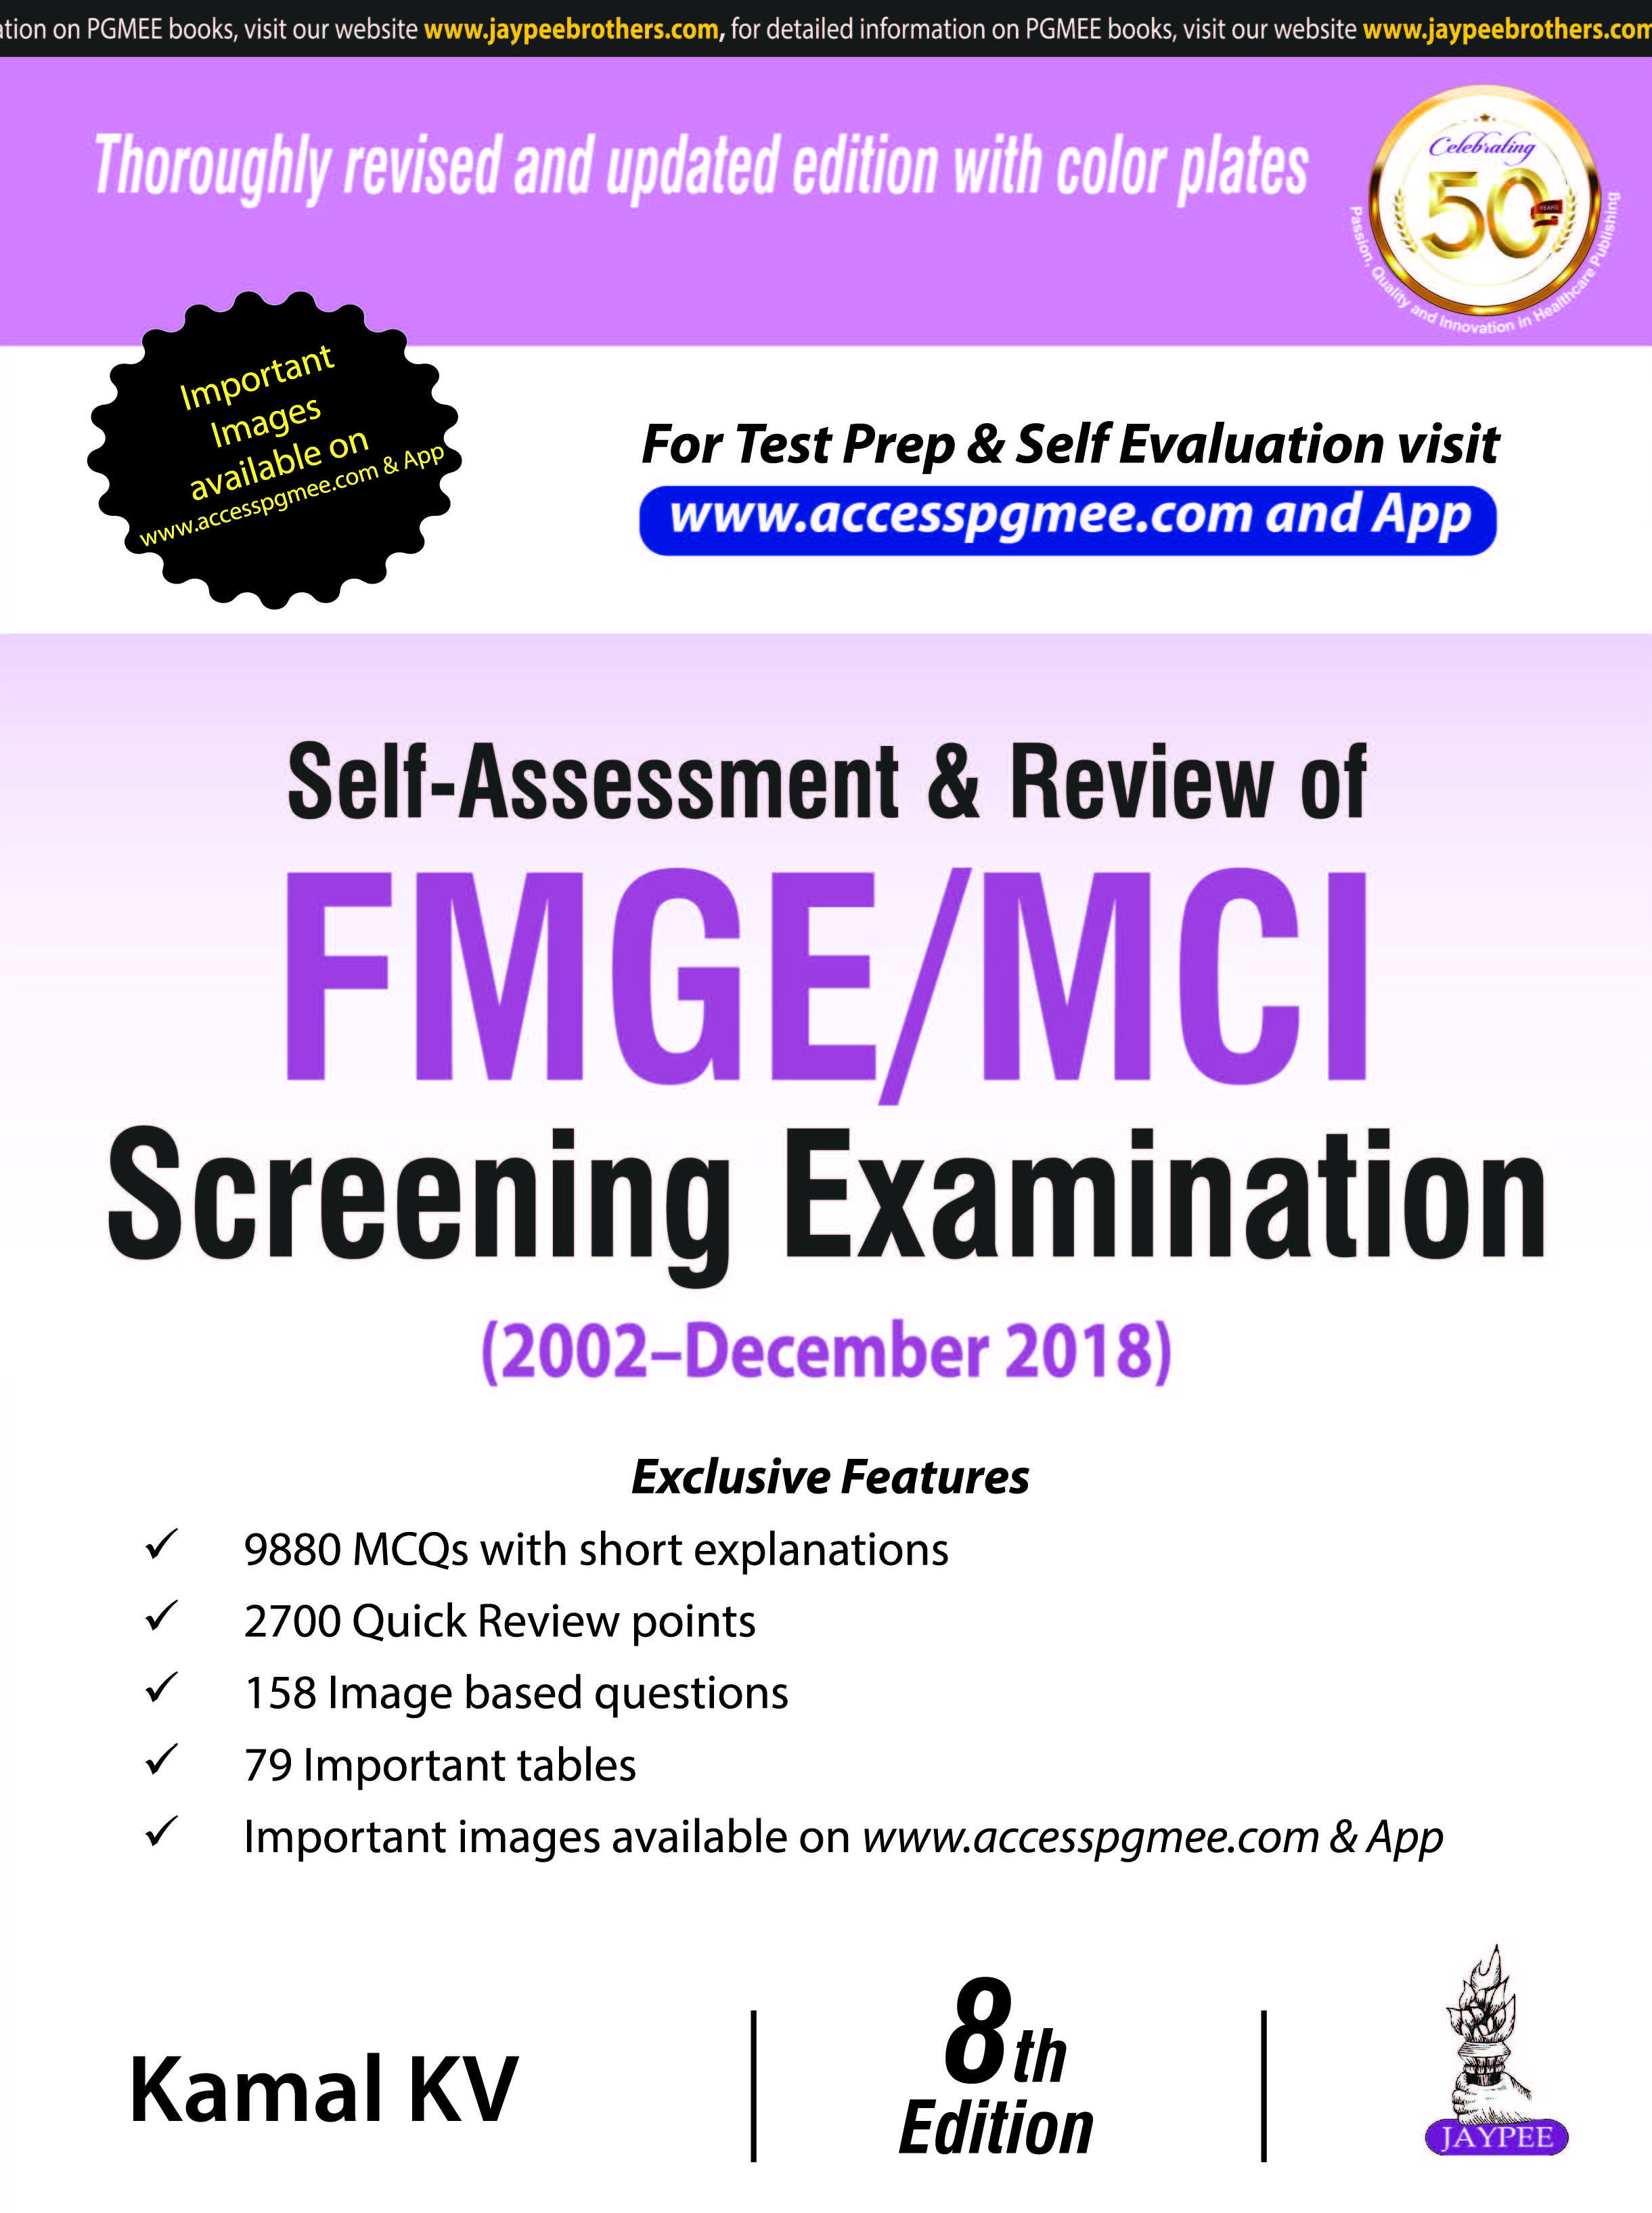 SELF-ASSESSMENT & REVIEW OF FMGE/MCI SCREENING EXAMINATION (2002-DECEMBER 2018)
,8/E,KAMAL KV